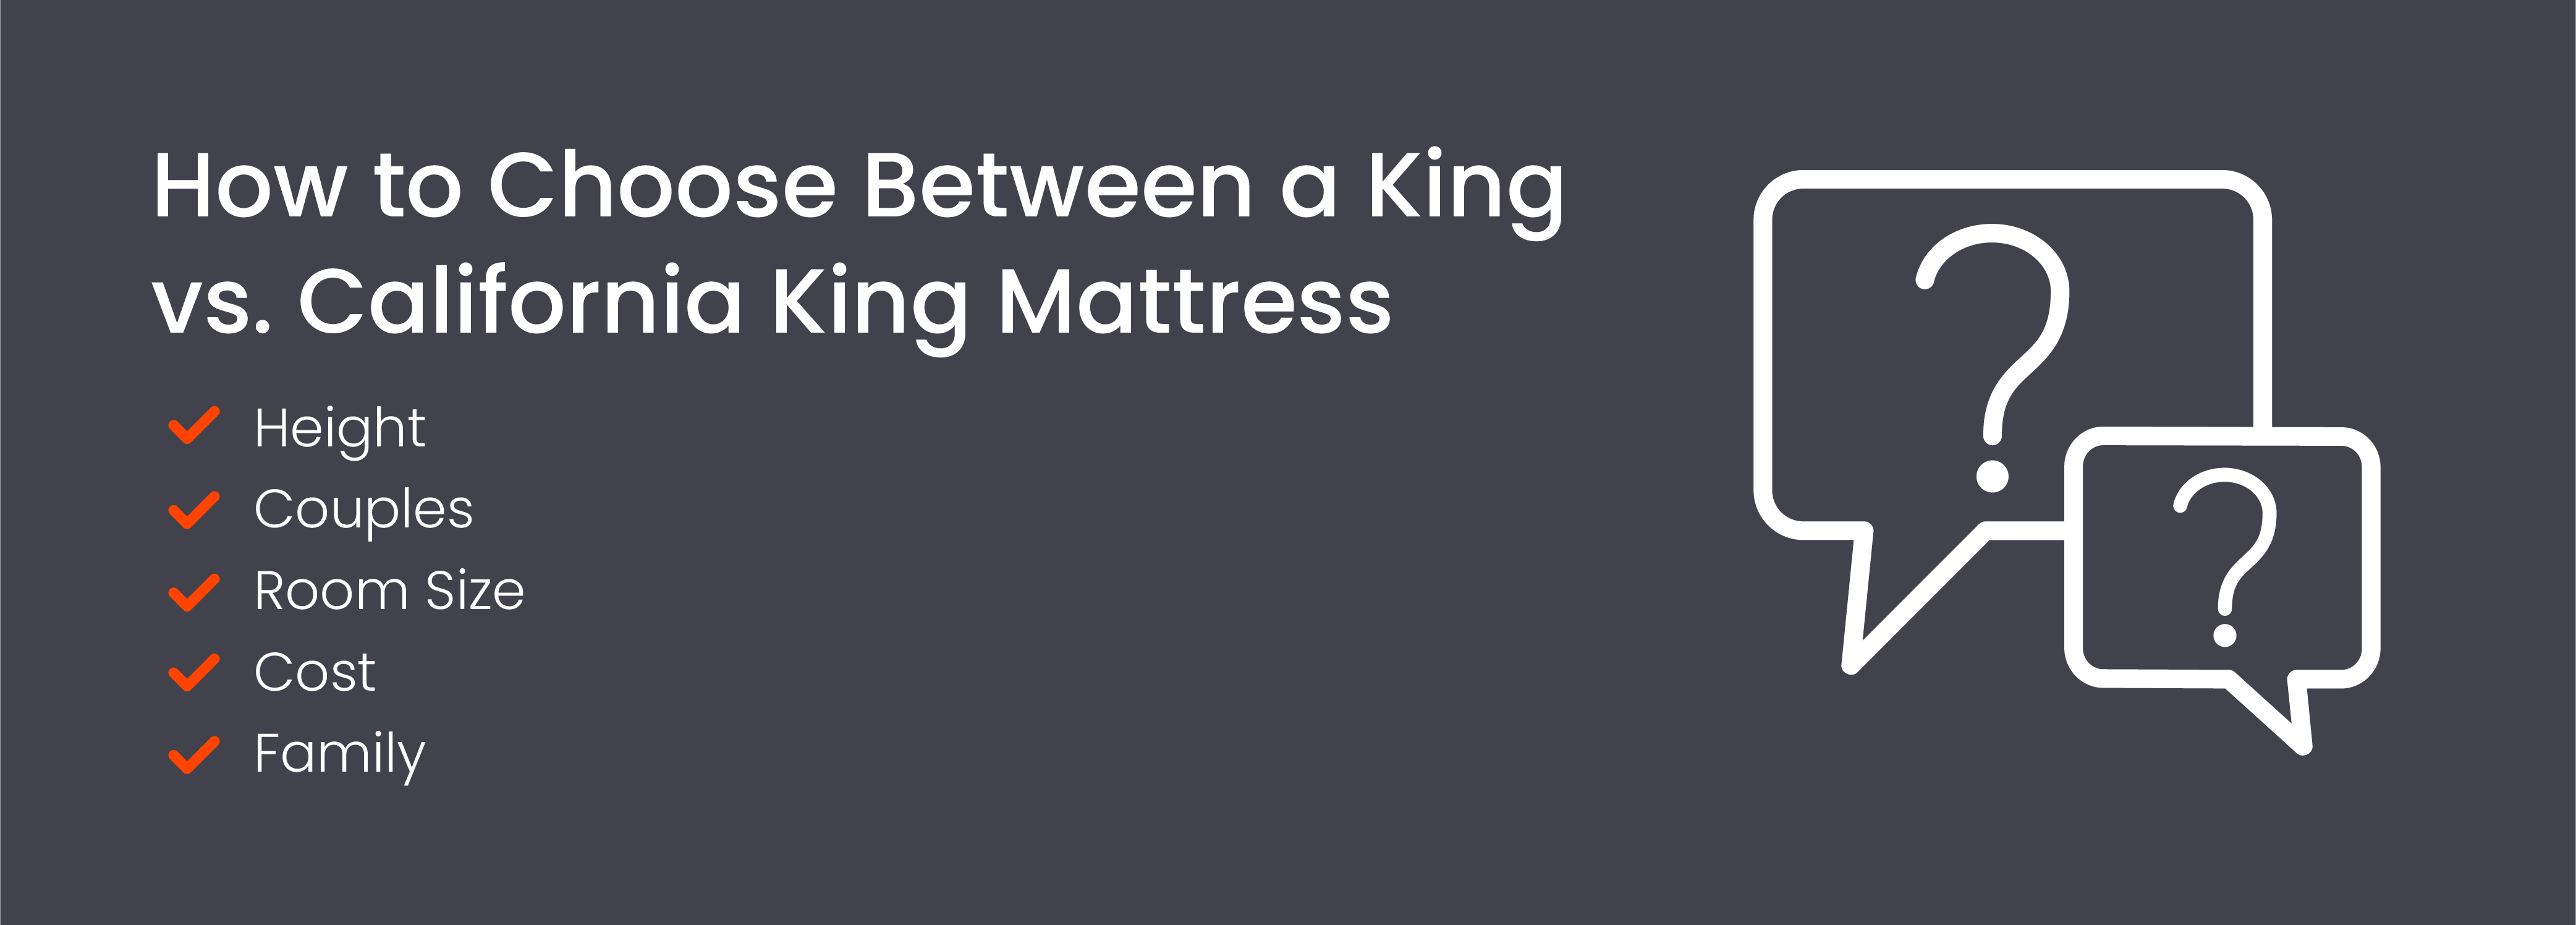 How to choose between a king vs. California king mattress